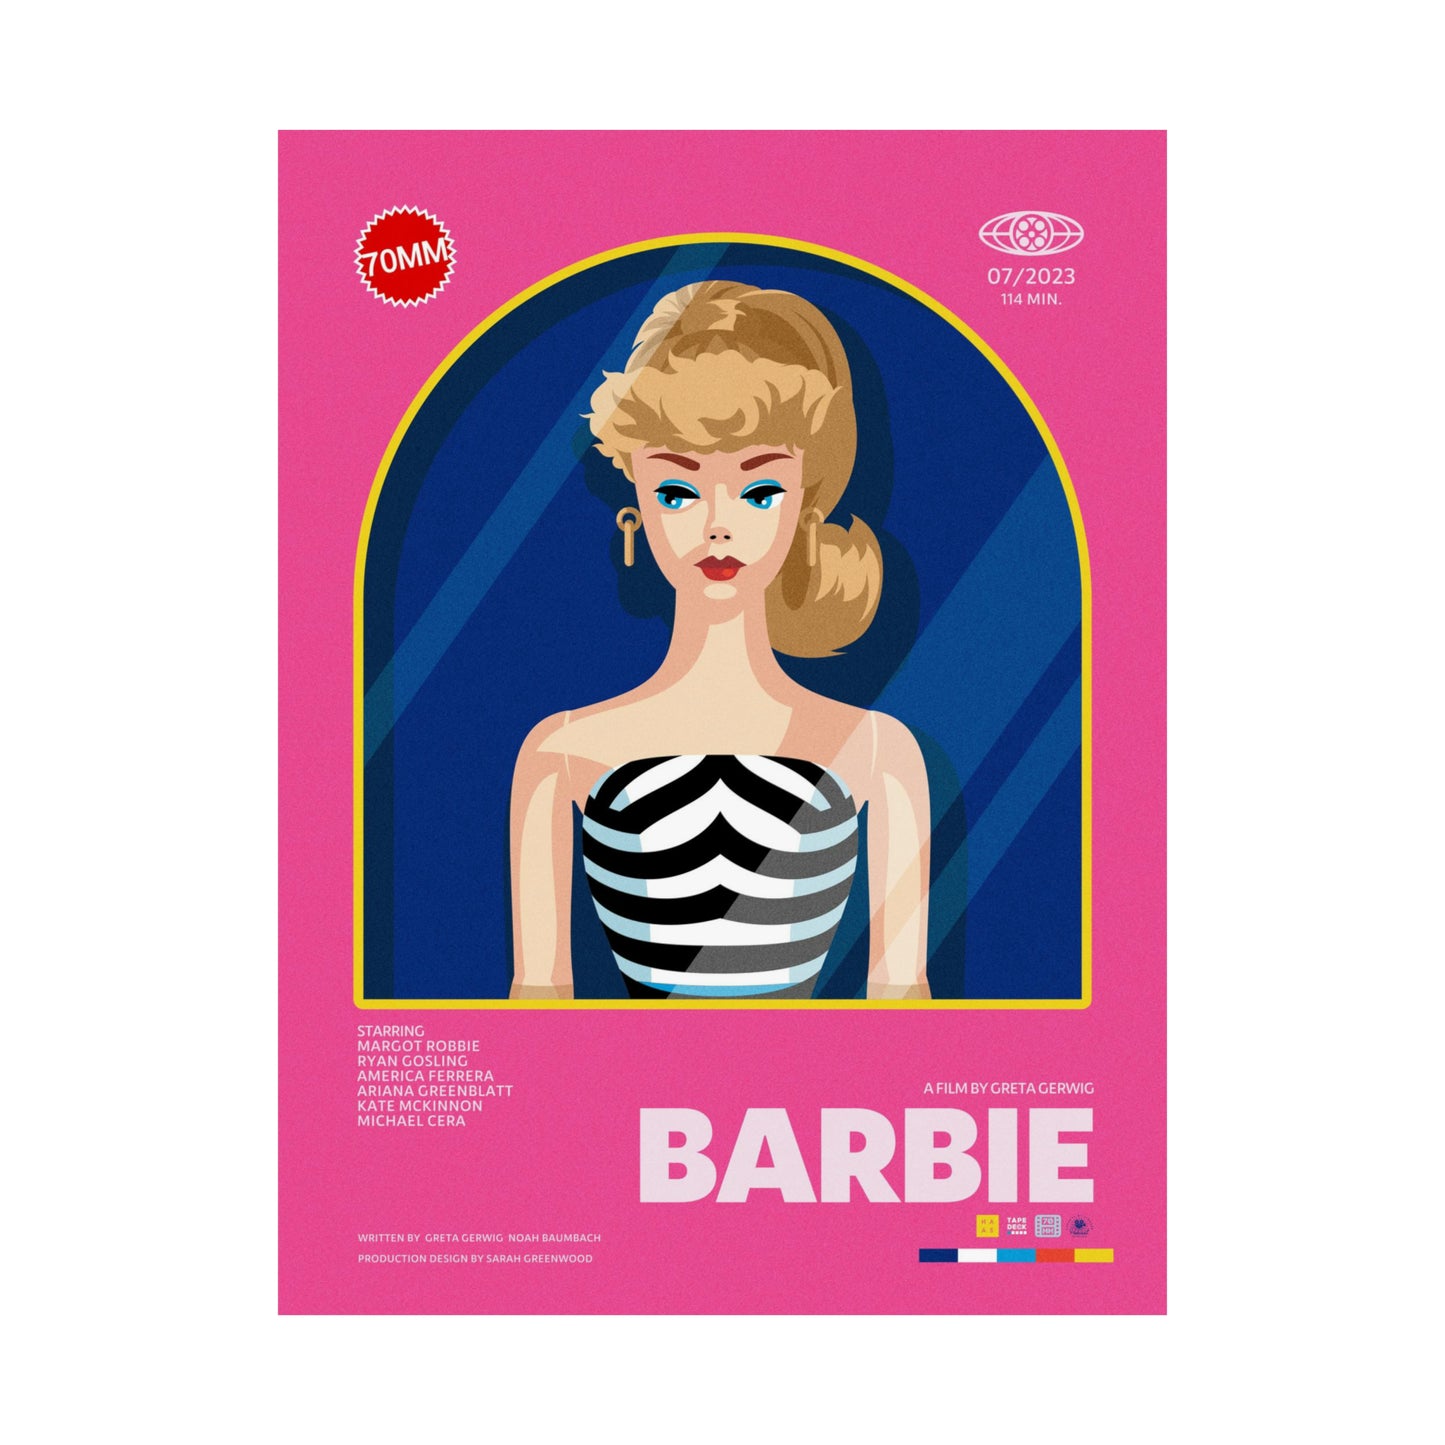 Episode 181: Barbie